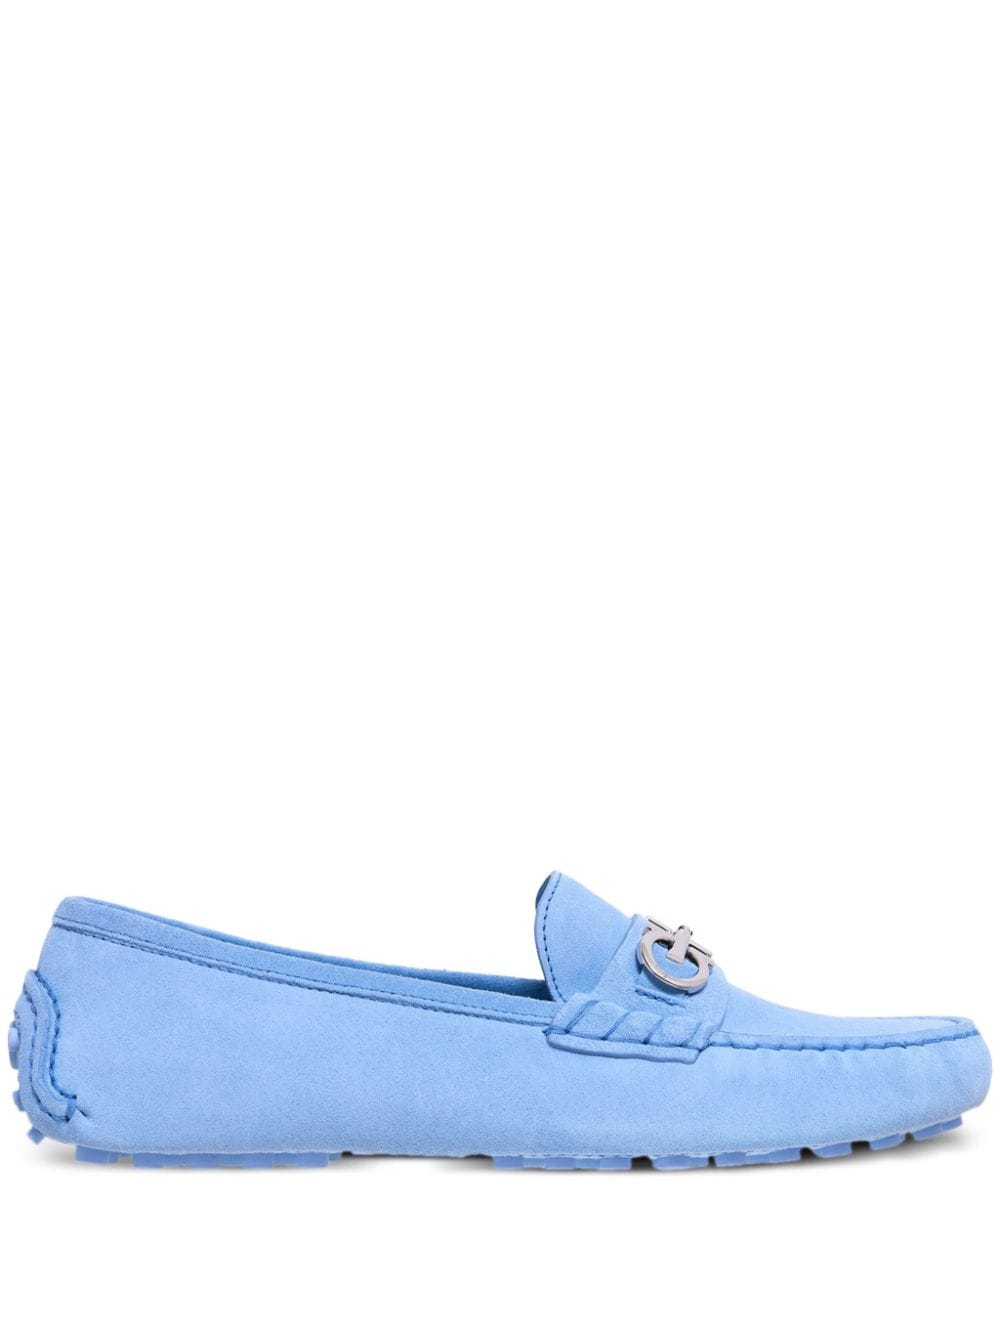 Ferragamo Gancini-buckle leather loafers - Blue